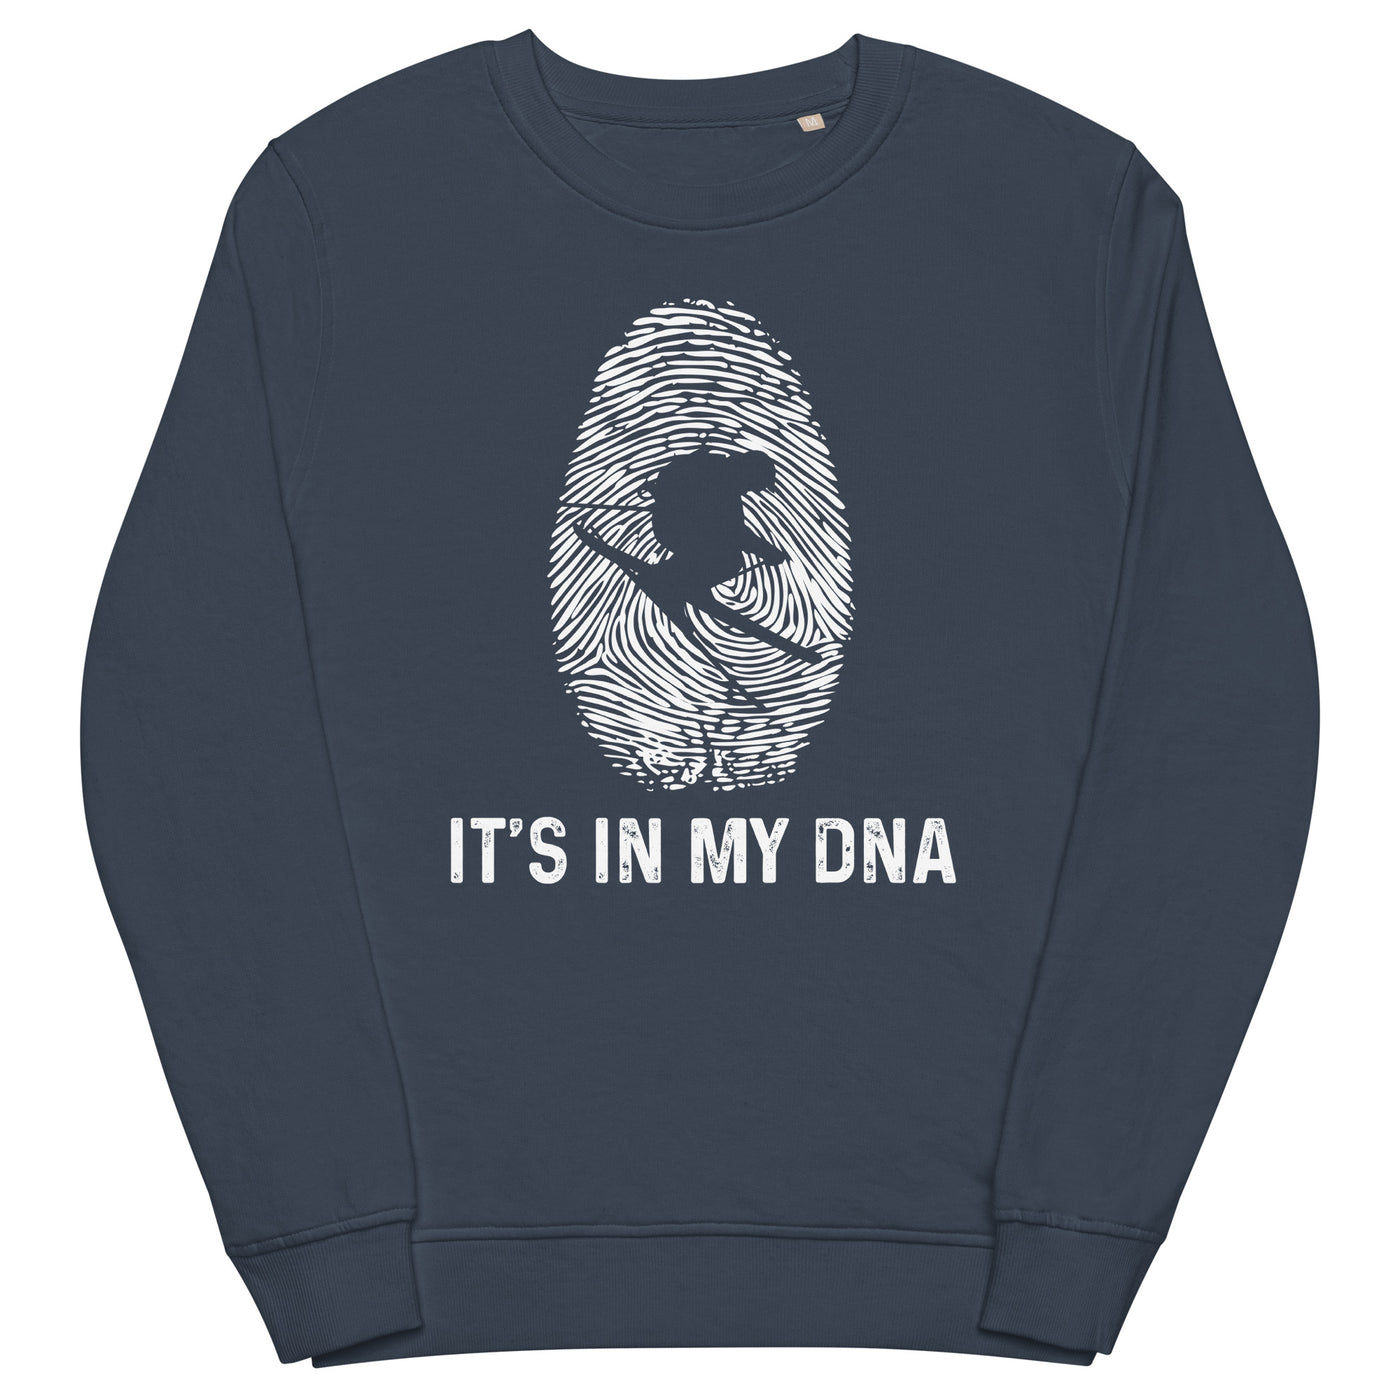 It's In My DNA - Unisex Premium Organic Sweatshirt klettern ski xxx yyy zzz French Navy